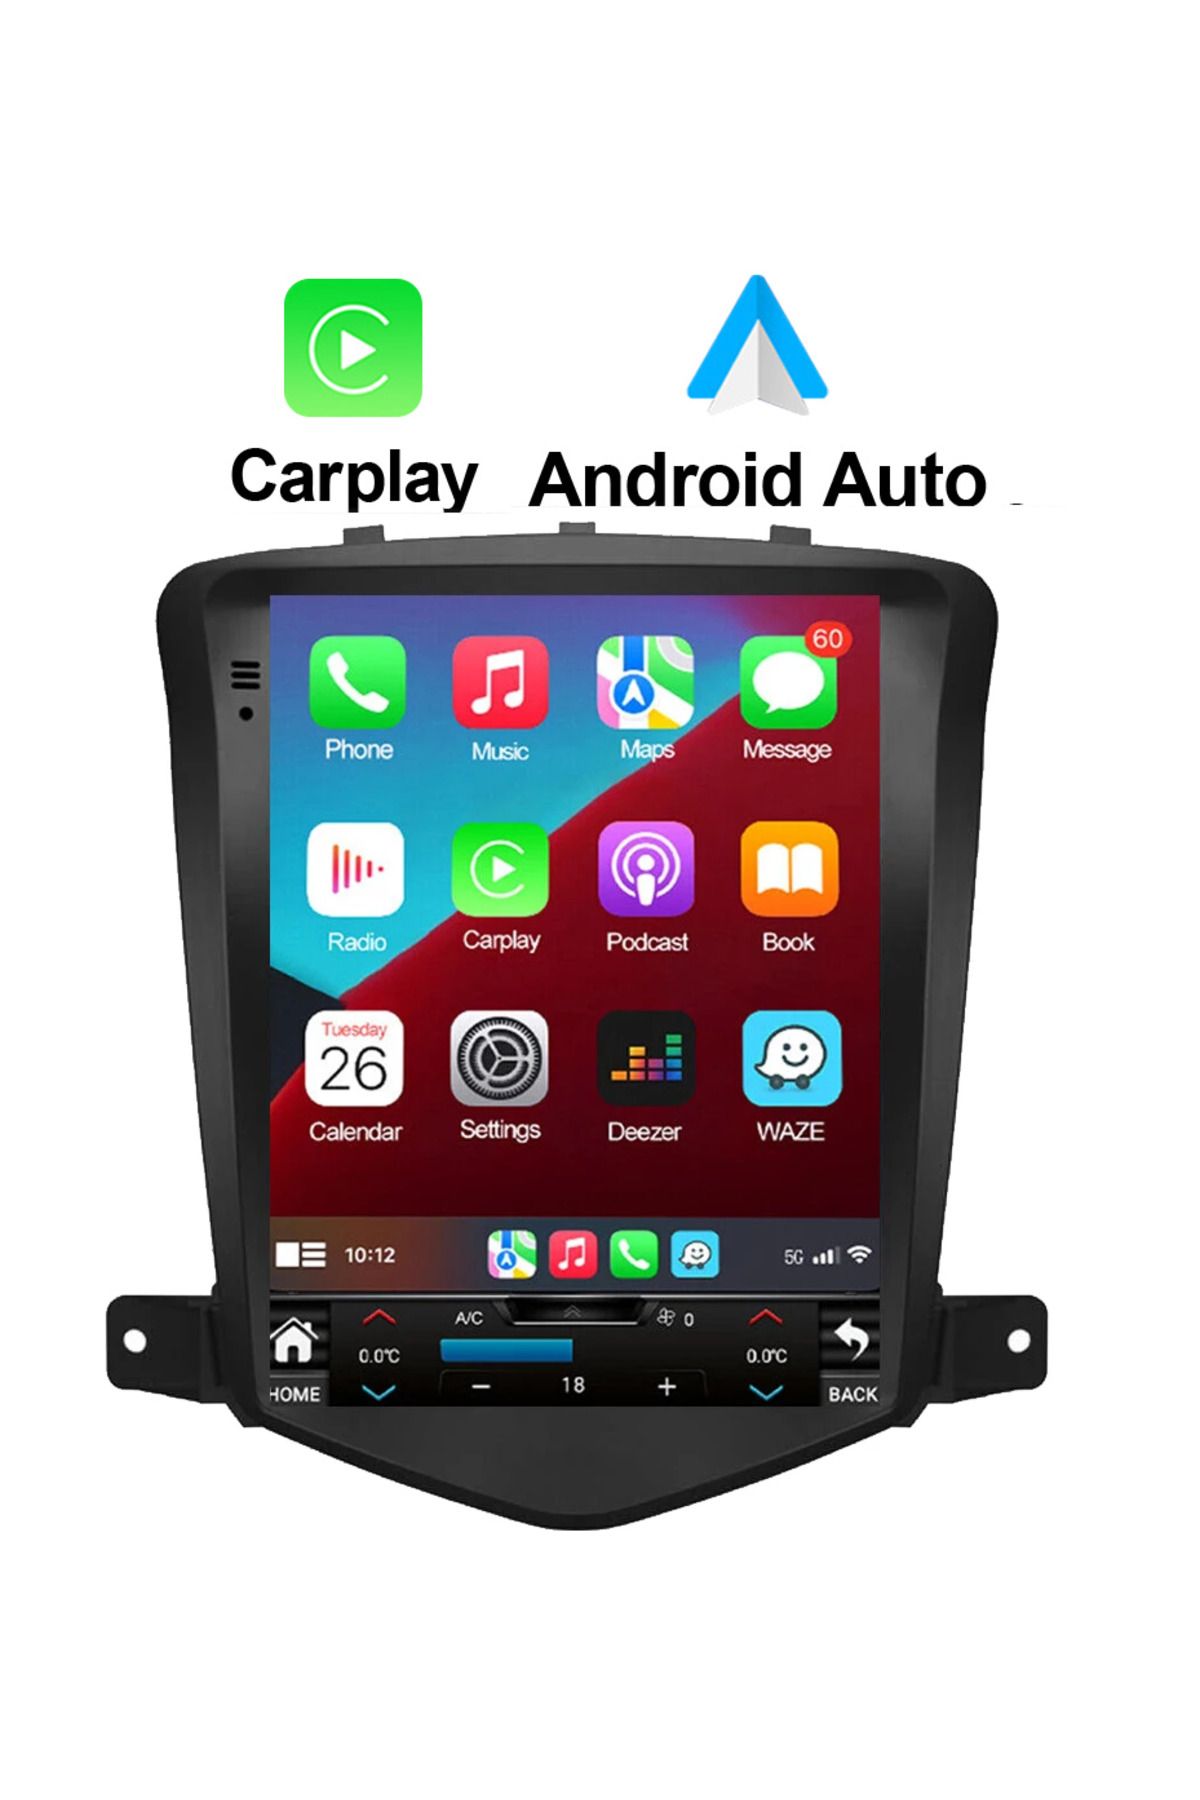 EXVOL Chevrolet Cruze Tesla Ekran Android Multimedya Ips Ekran 2gb Ram -32gb Hafıza Carplay Kamera Hediye